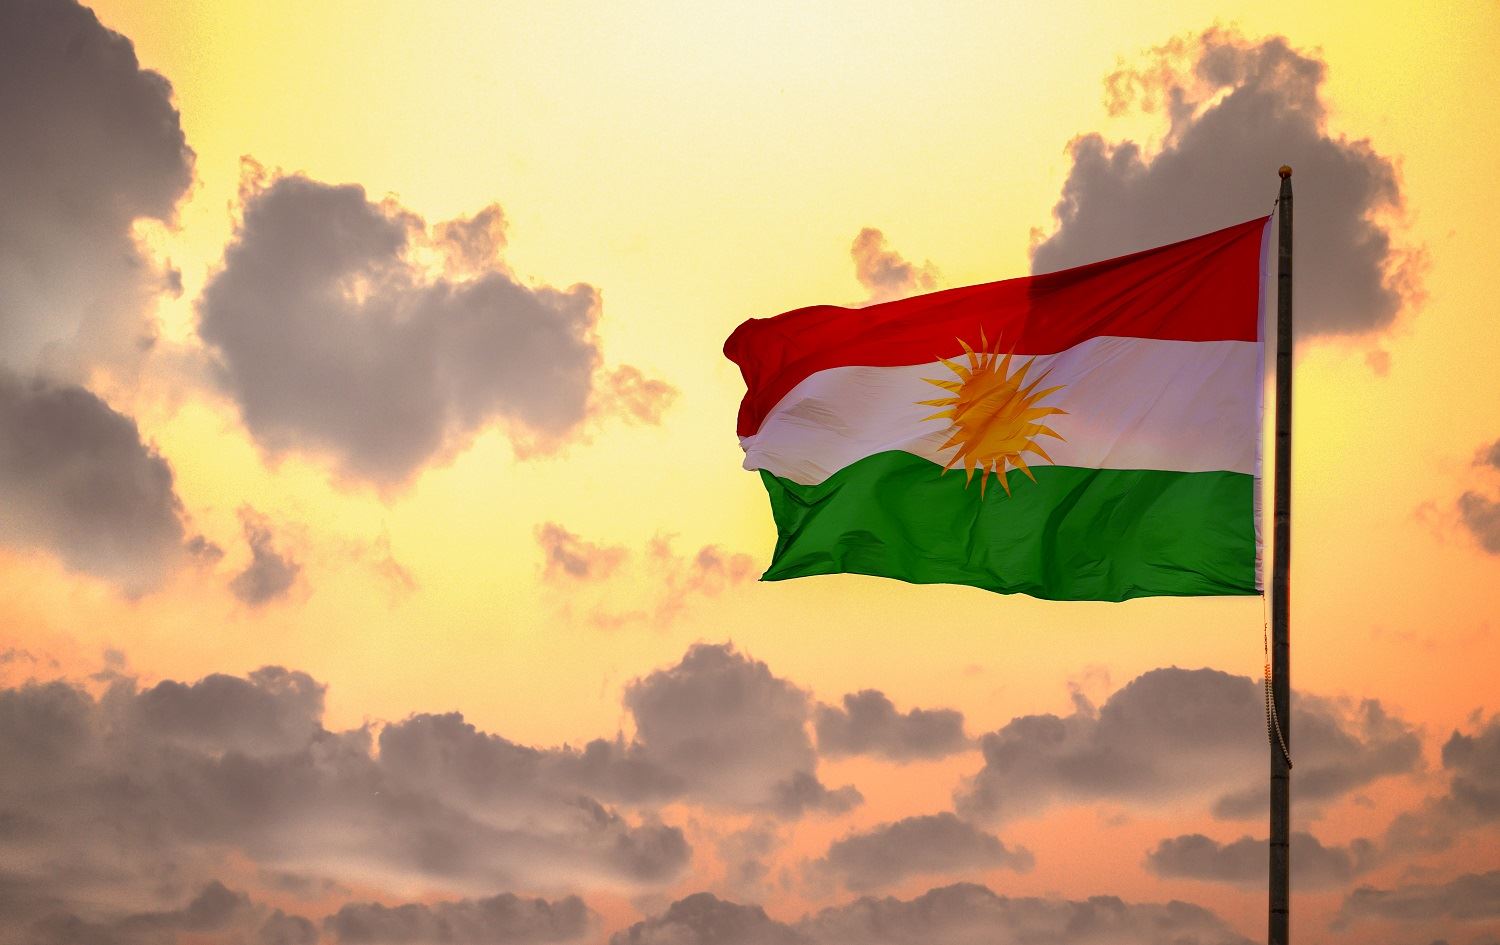 Kurdistan Region leaders commemorate 30th